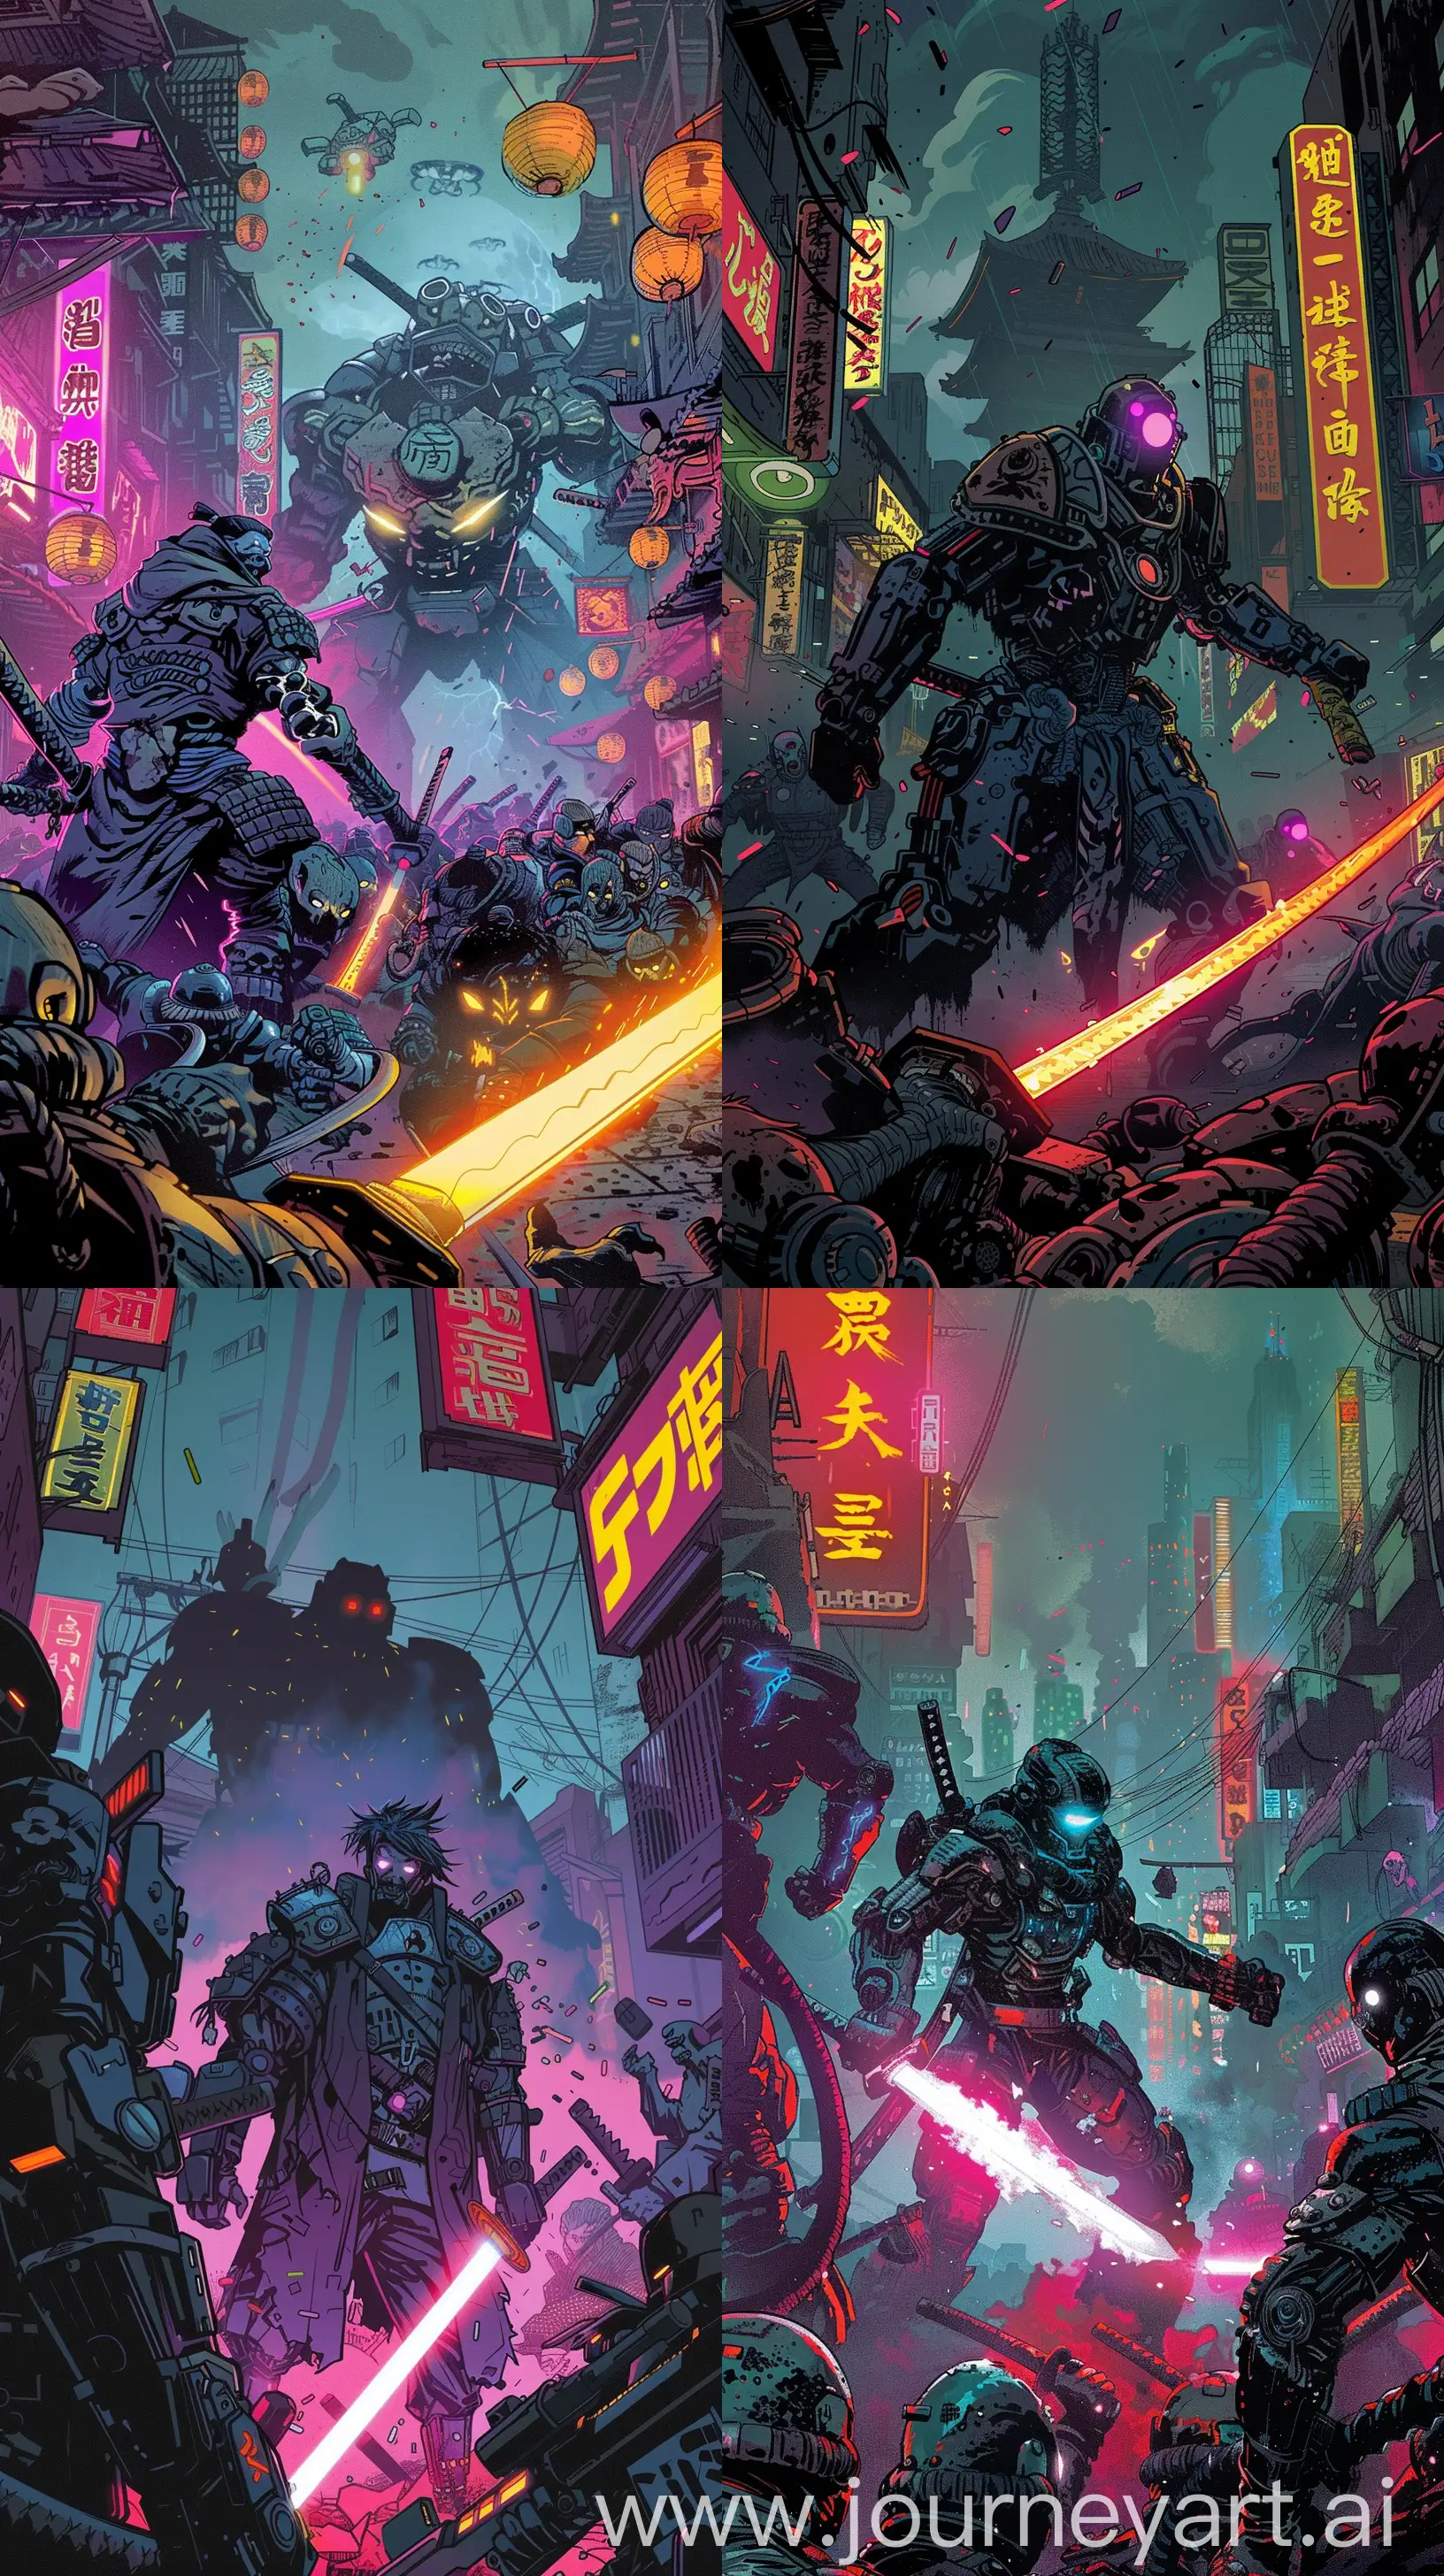 Cybernetic-Samurai-vs-Futuristic-Ninjas-in-NeonLit-Dystopian-City